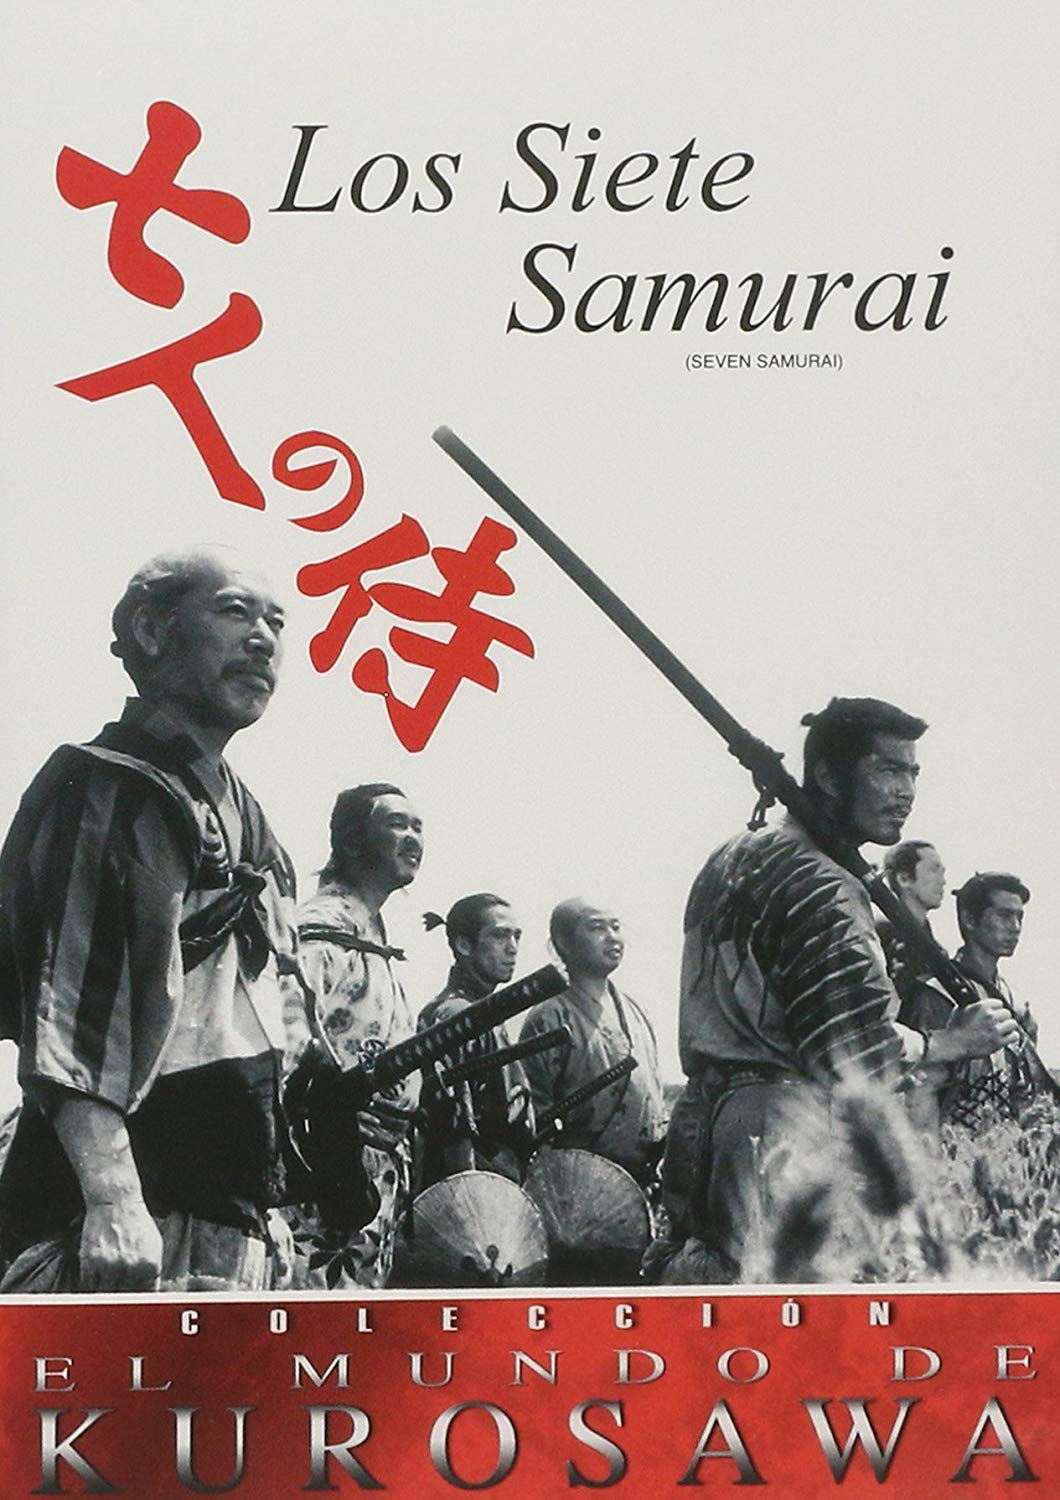 Toshirô Mifune, Daisuke Katô, and Takashi Shimura in Seven Samurai (1954)